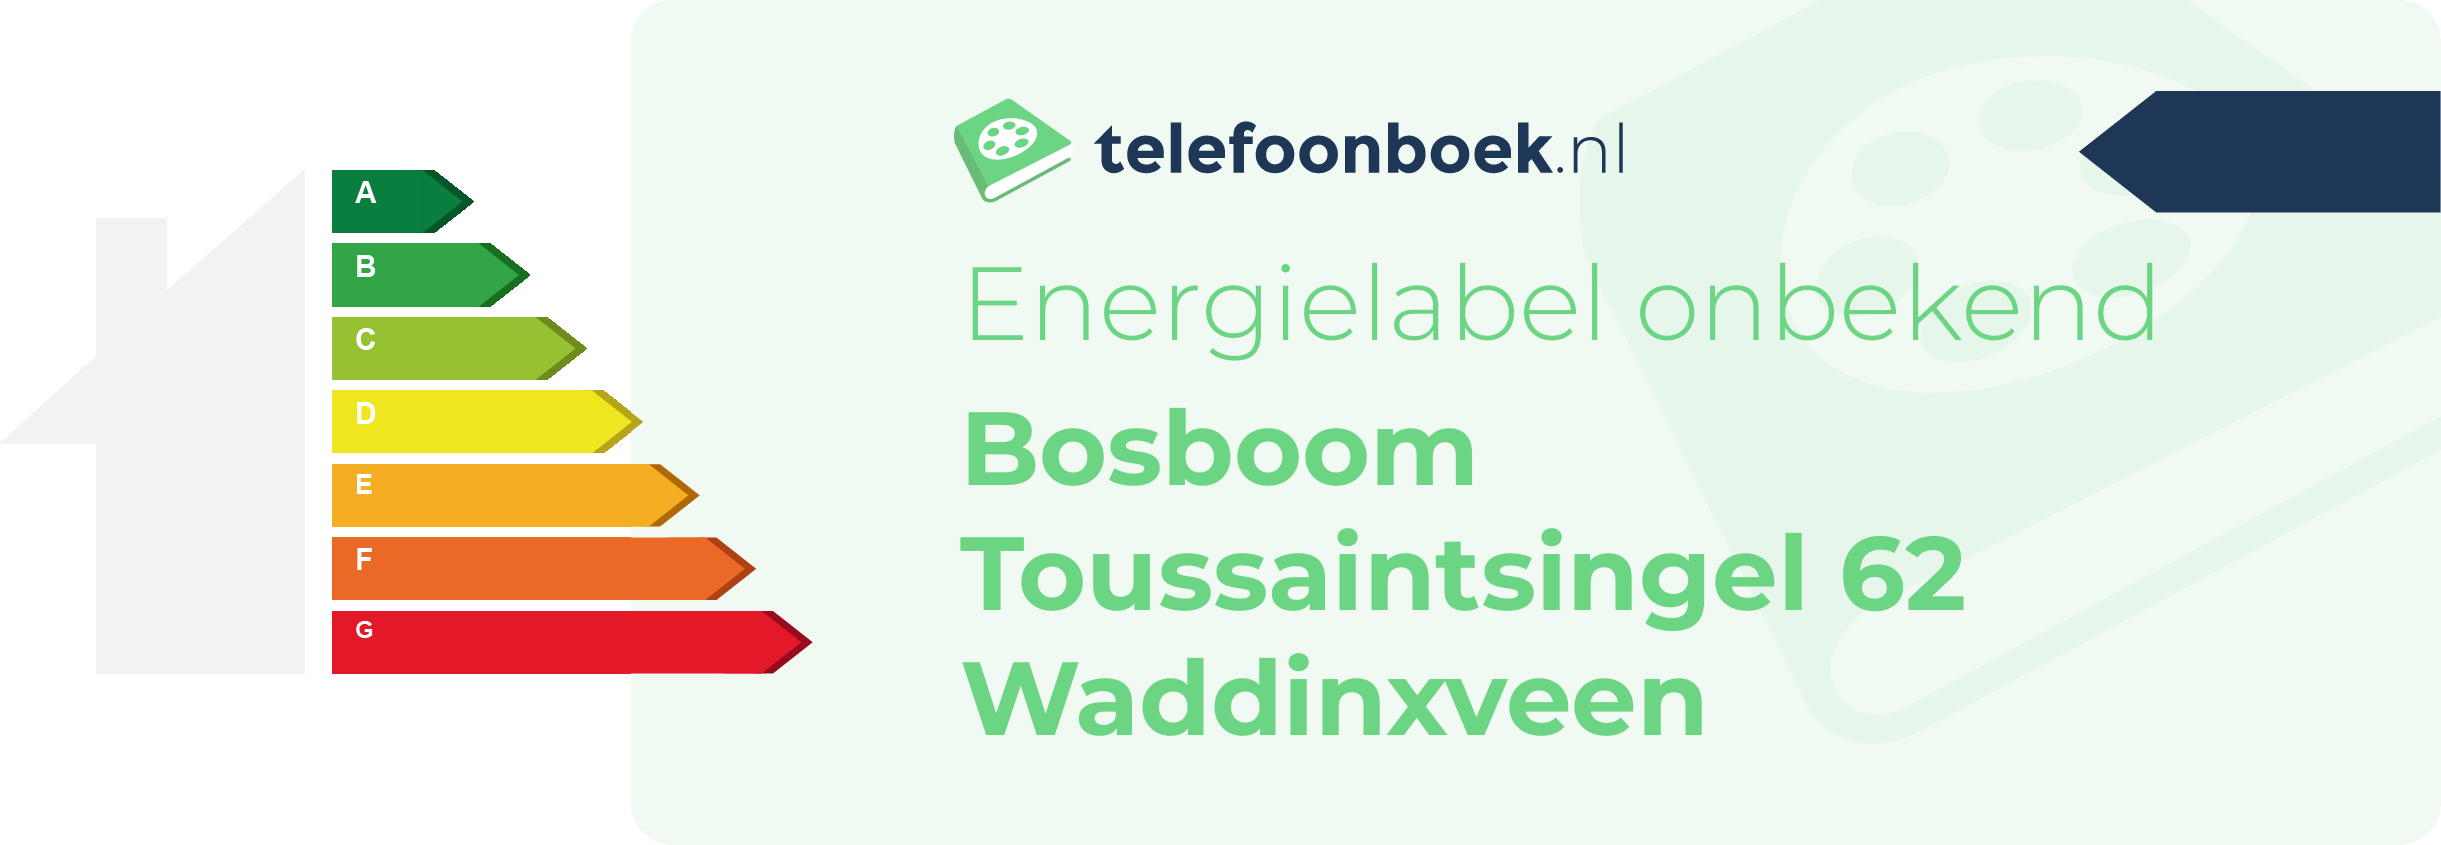 Energielabel Bosboom Toussaintsingel 62 Waddinxveen